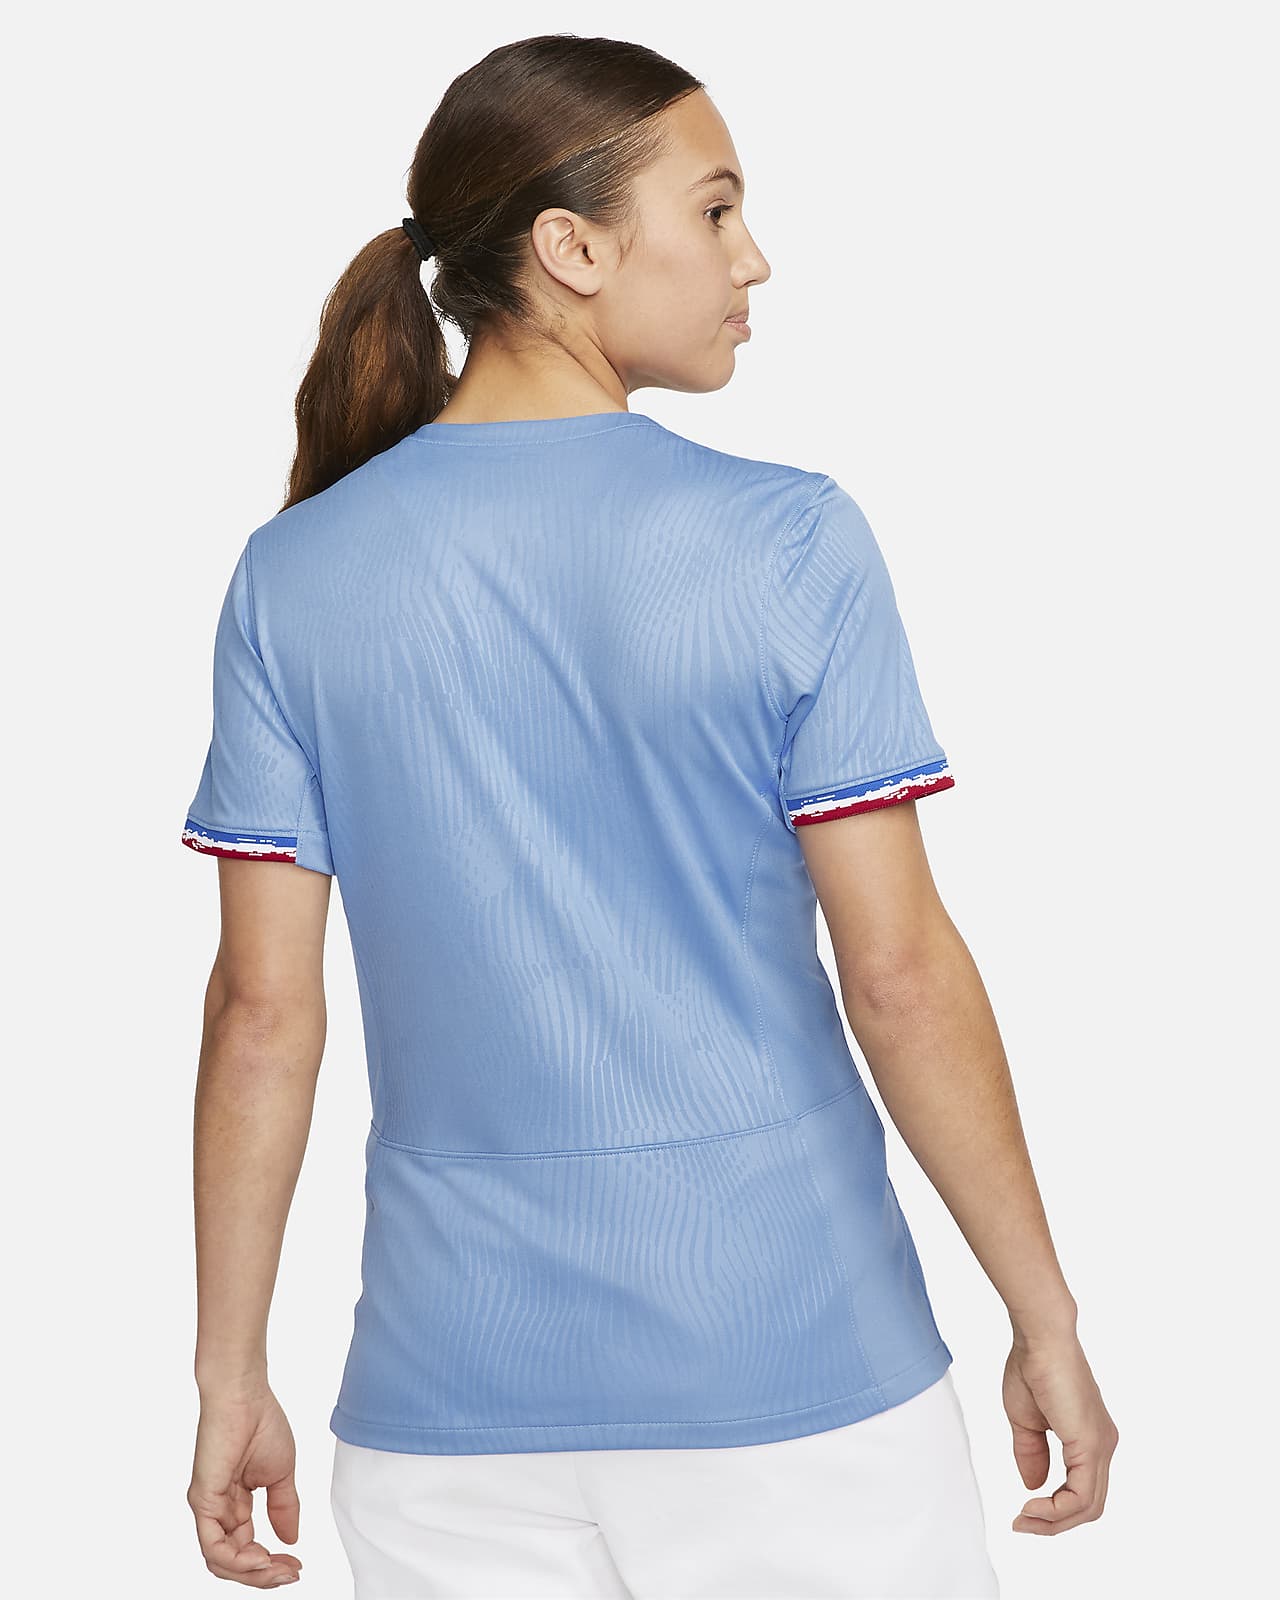 FFF 2023 Match Home Women's Nike Dri-FIT ADV Football Shirt